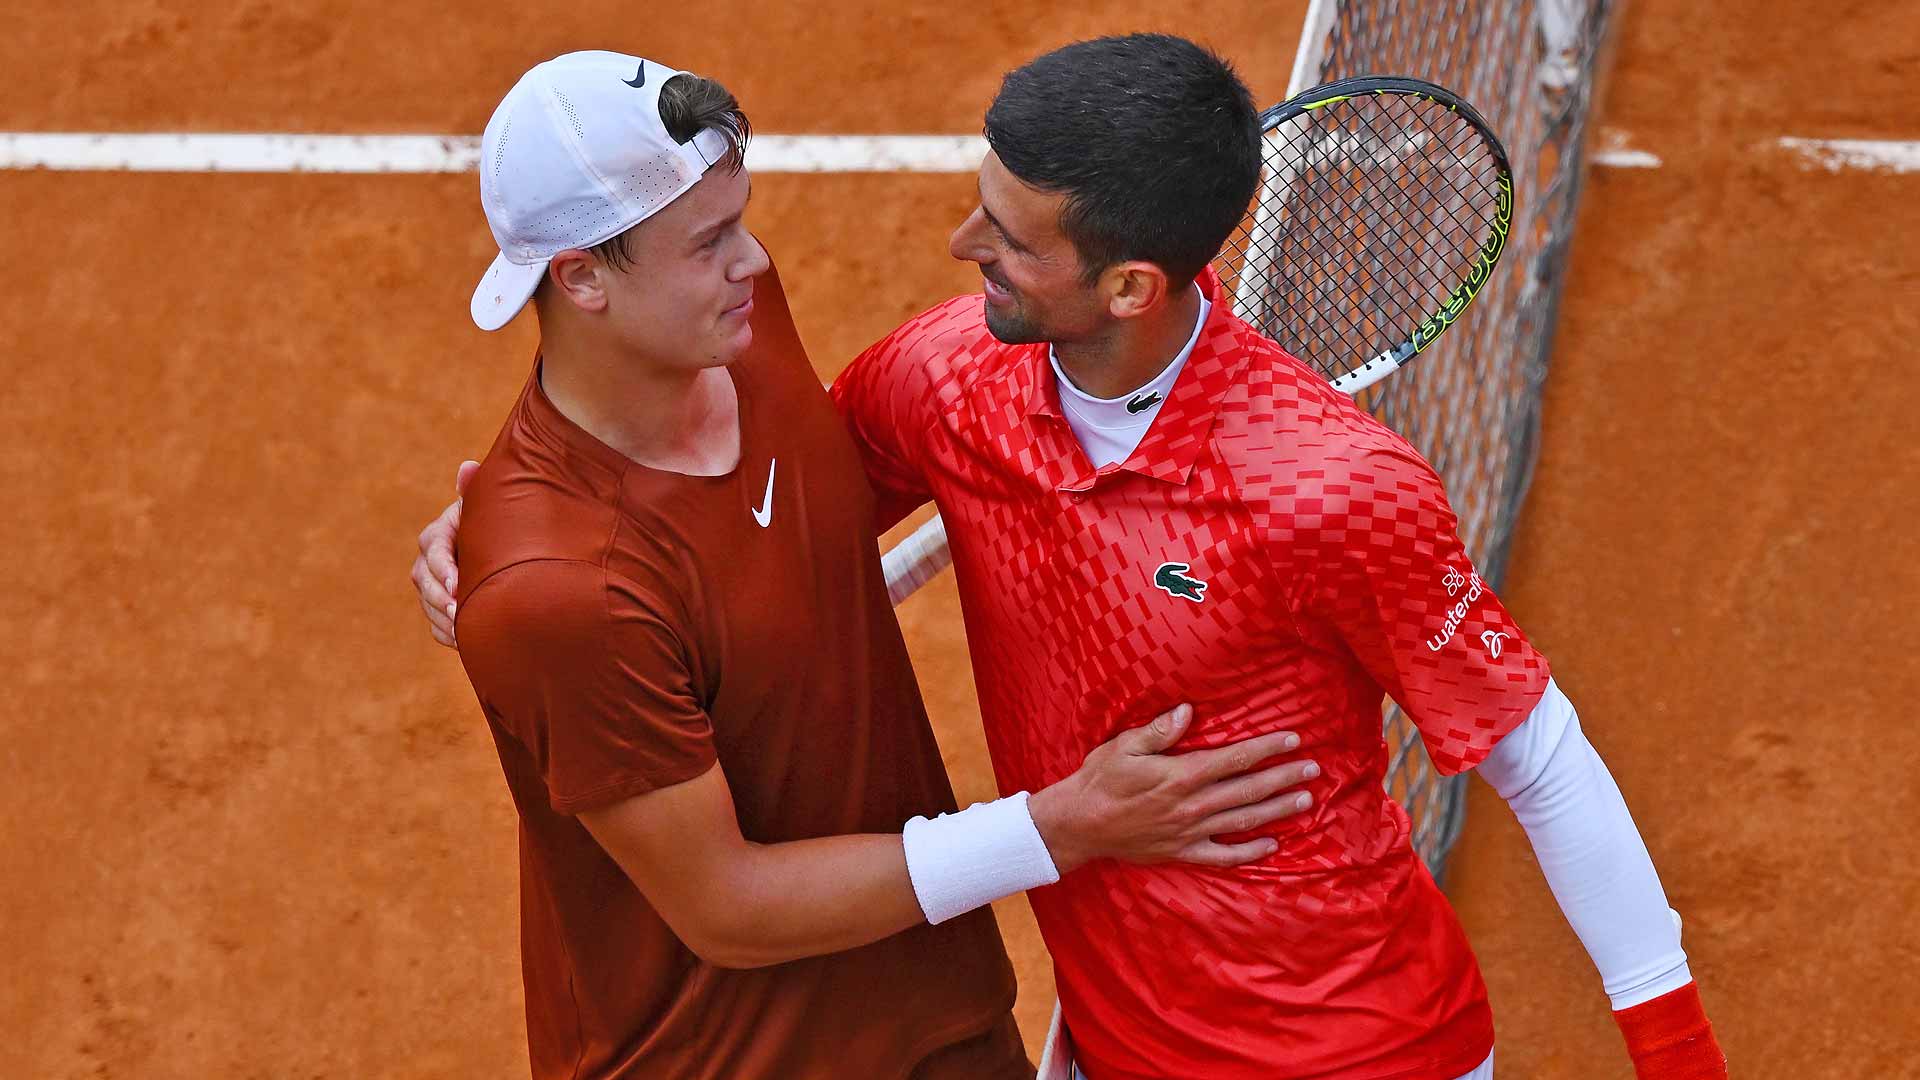 Holger Rune defeats Novak Djokovic in three sets on Wednesday in Rome.